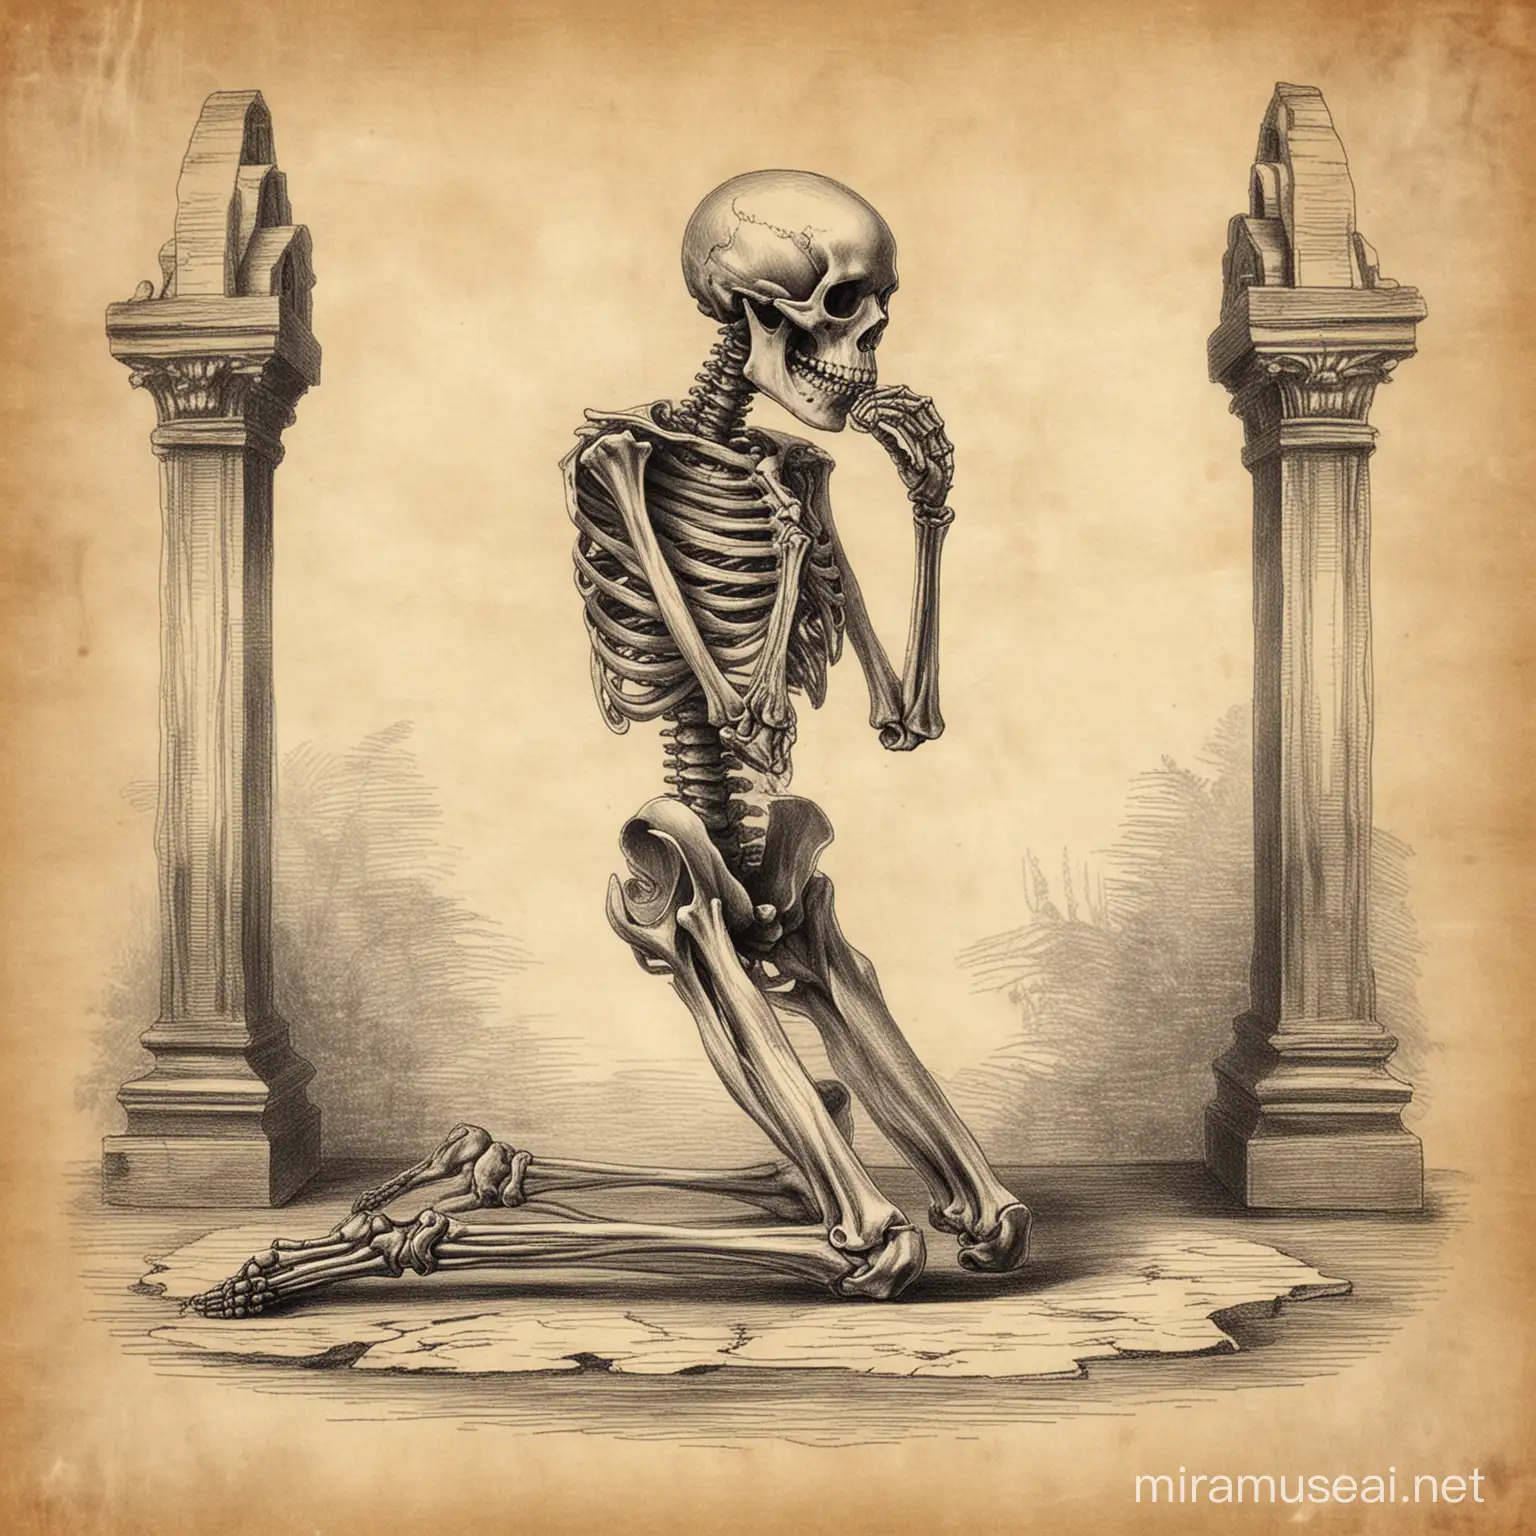 skeleton praying on his knees
vintage sketch